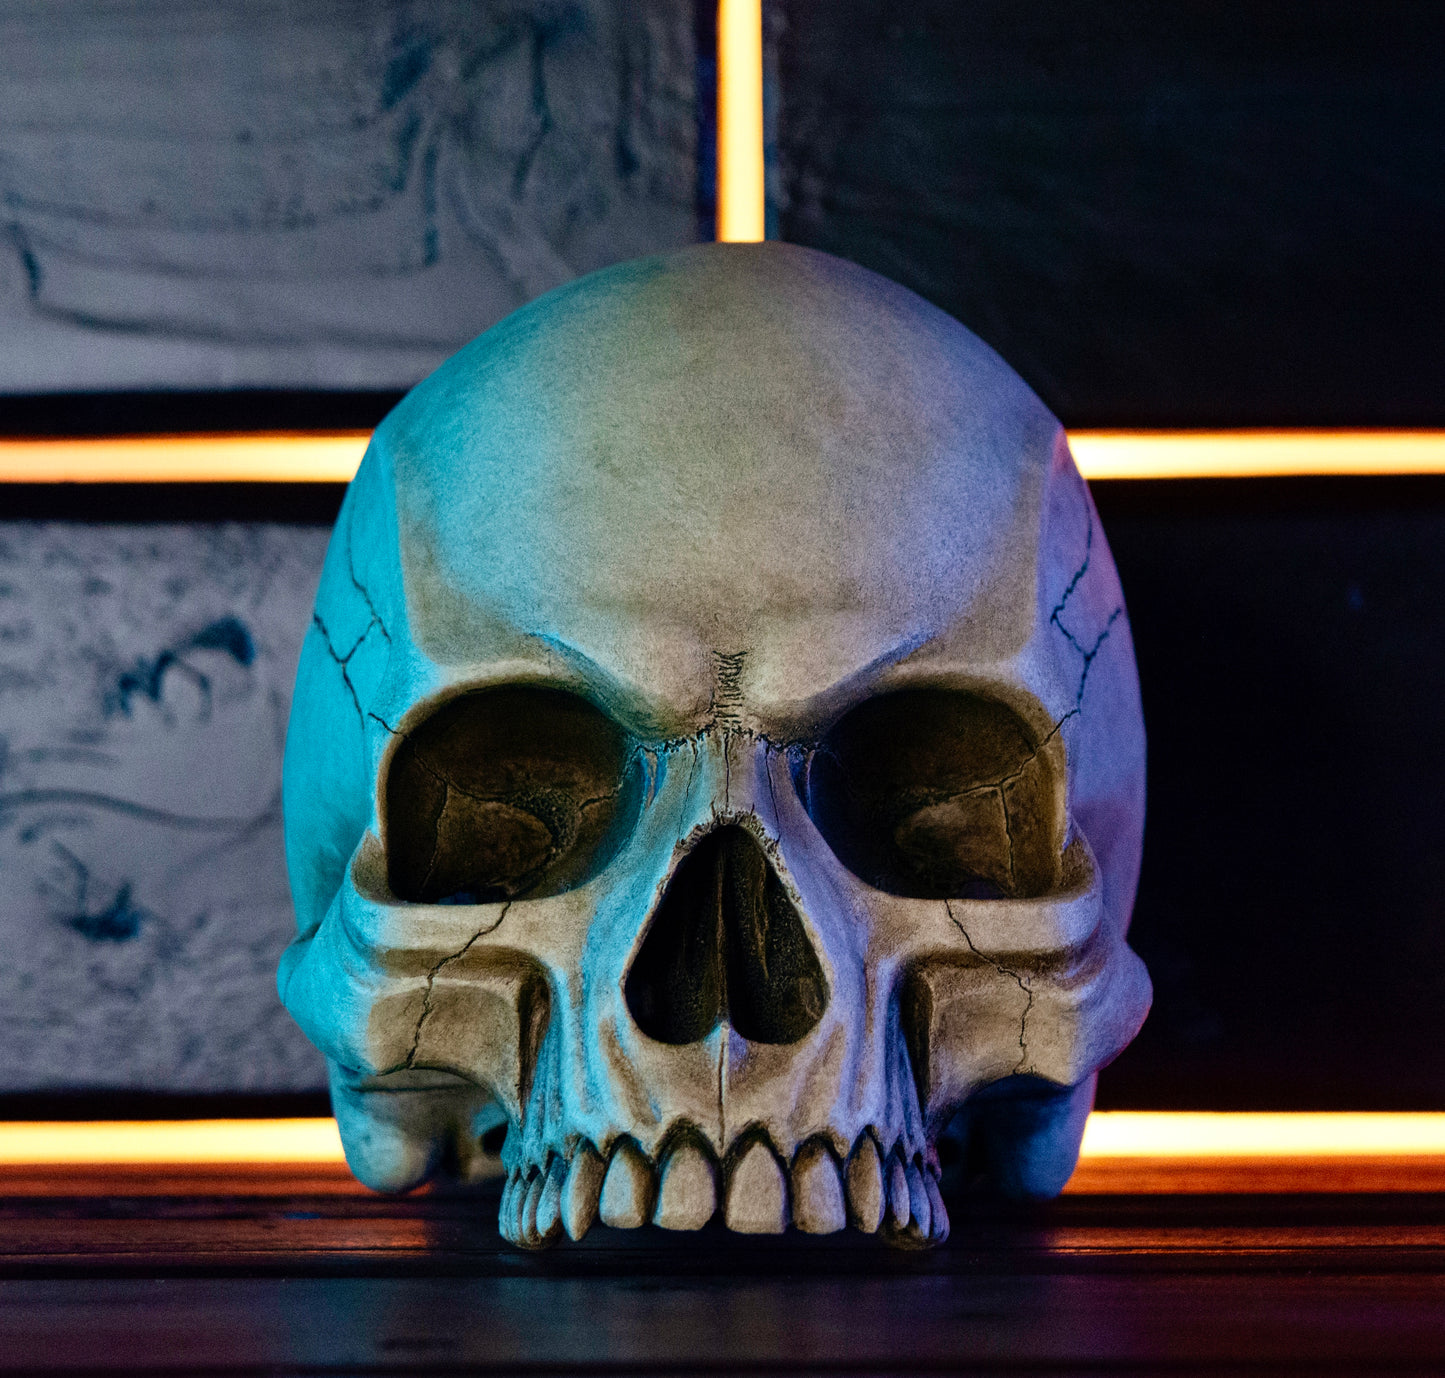 Angry Skull "Old Bones"